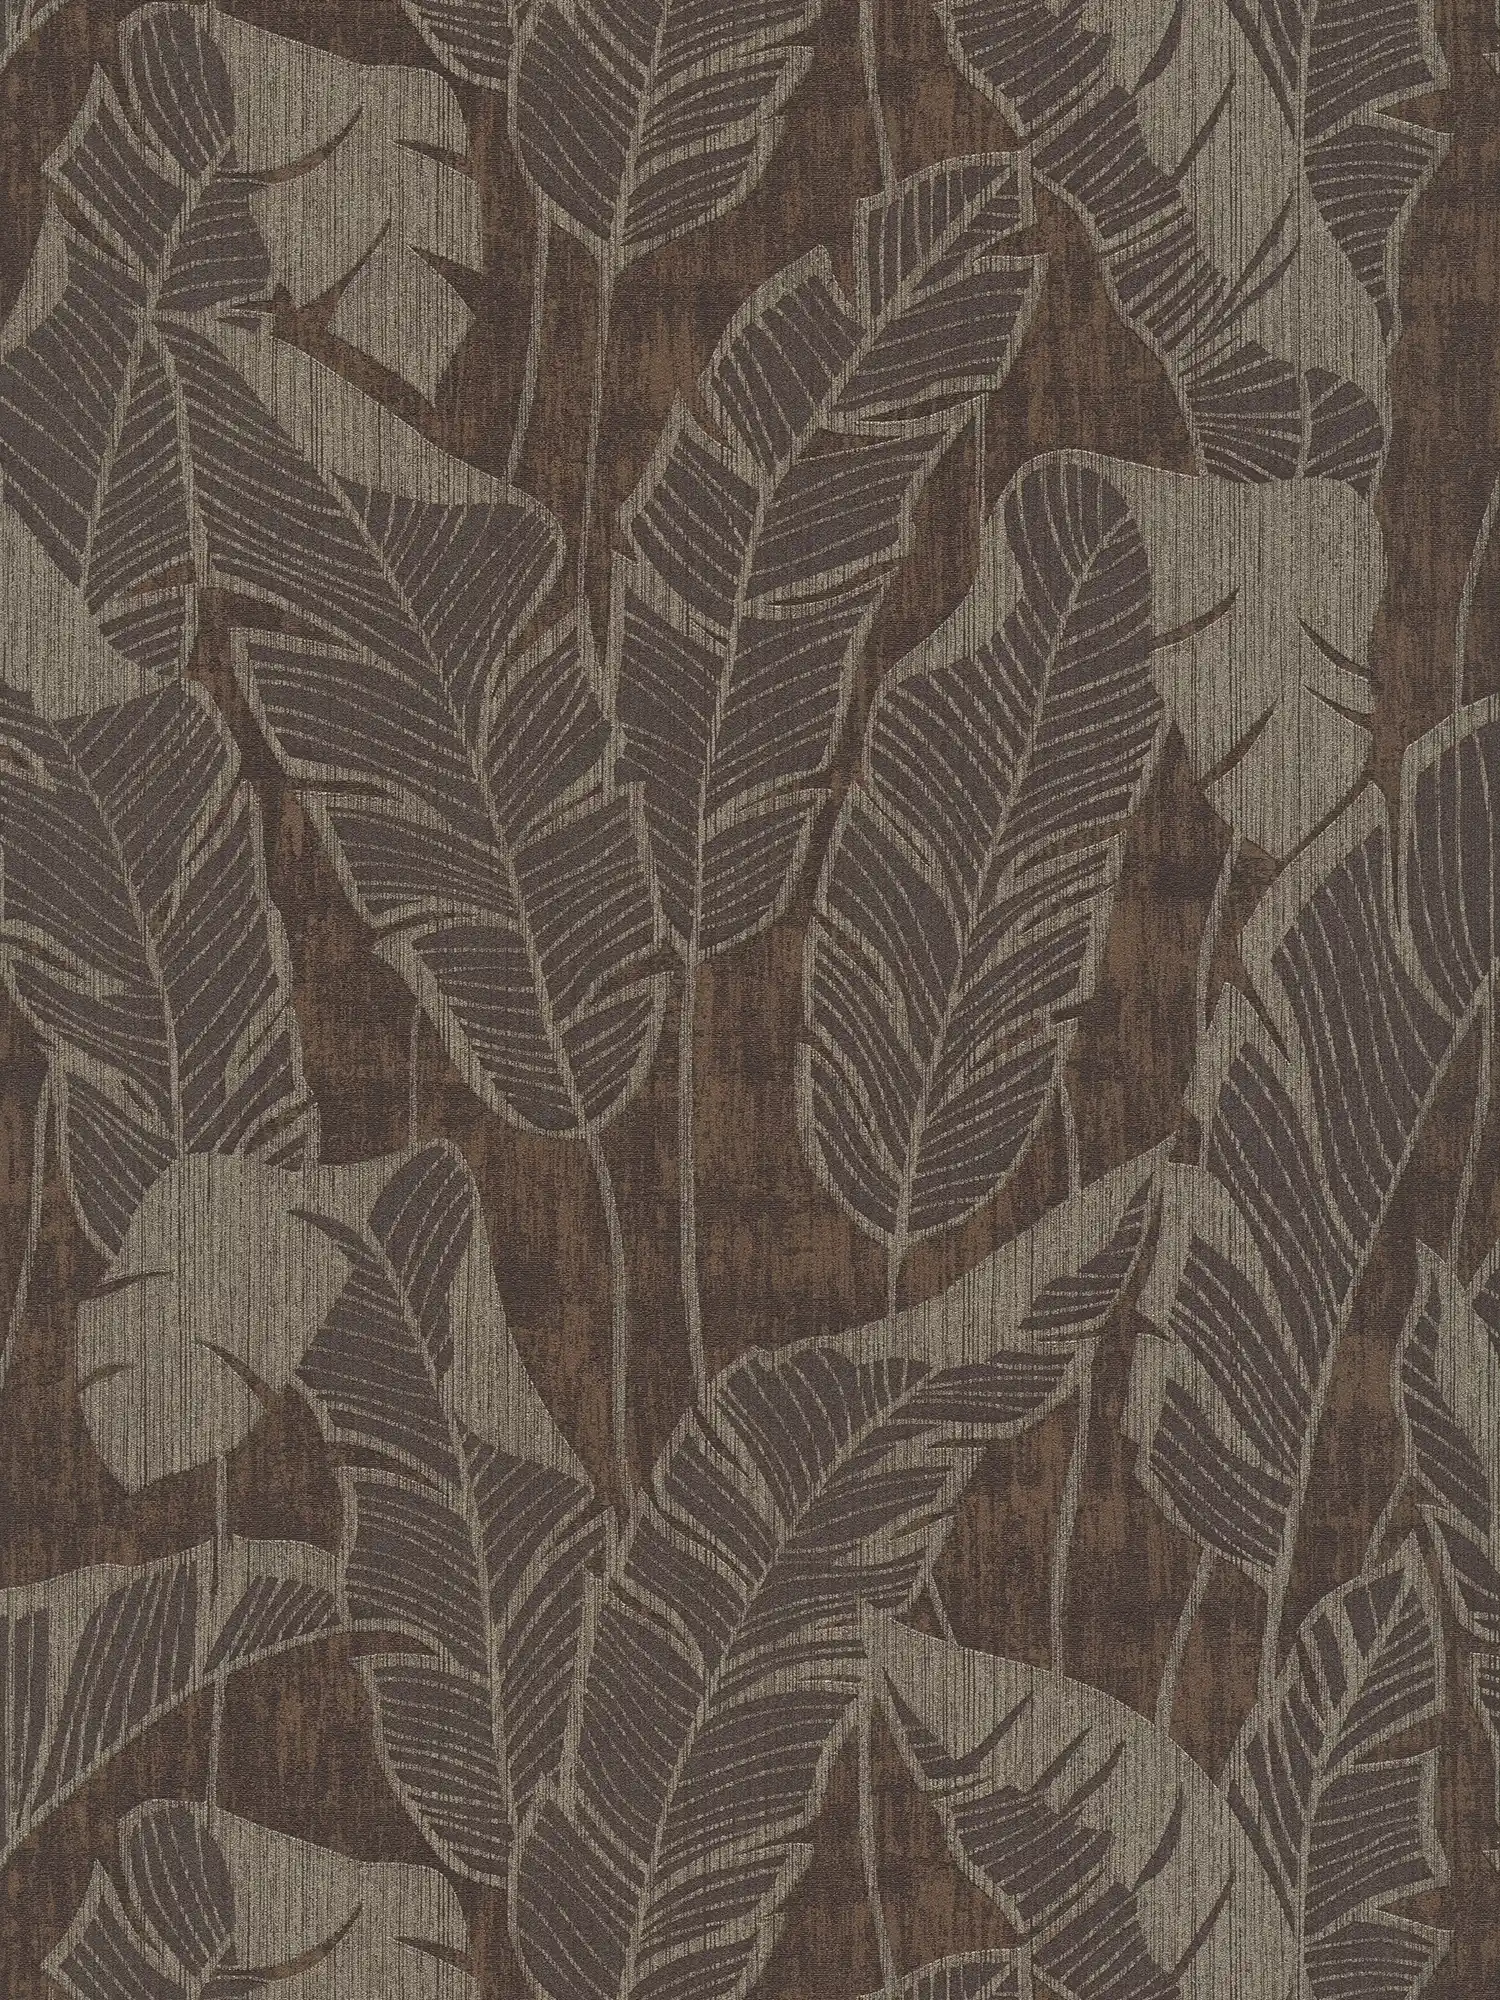 Floral pattern wallpaper with jungle design - brown, grey, black
